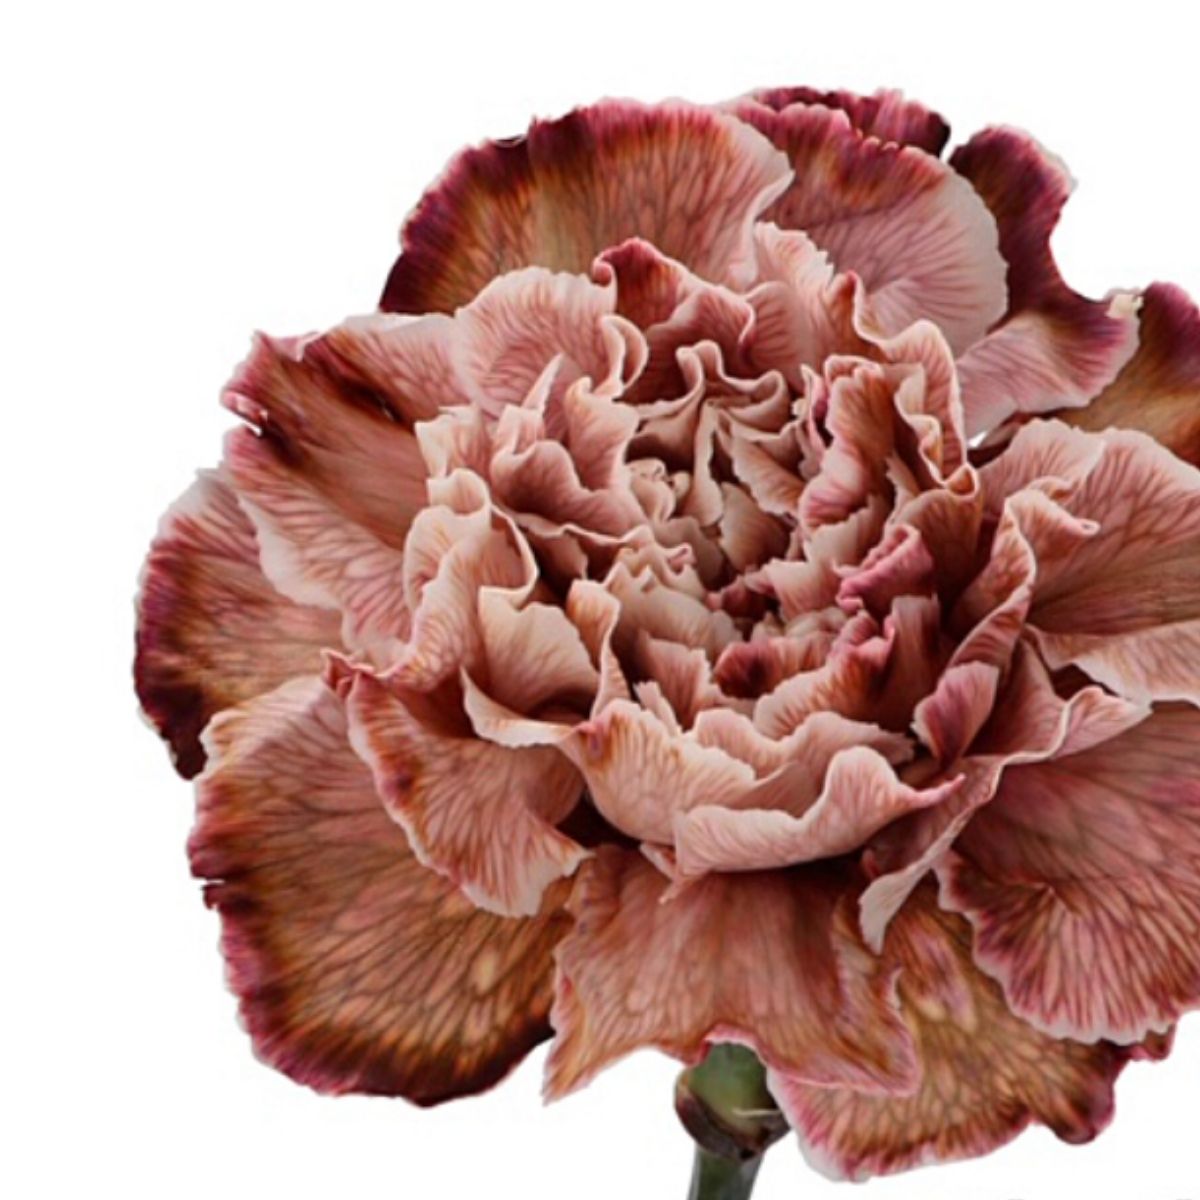 Marc Sassen - Vip Roses - Brownie Carnation - Article - on Thursd Highlighted